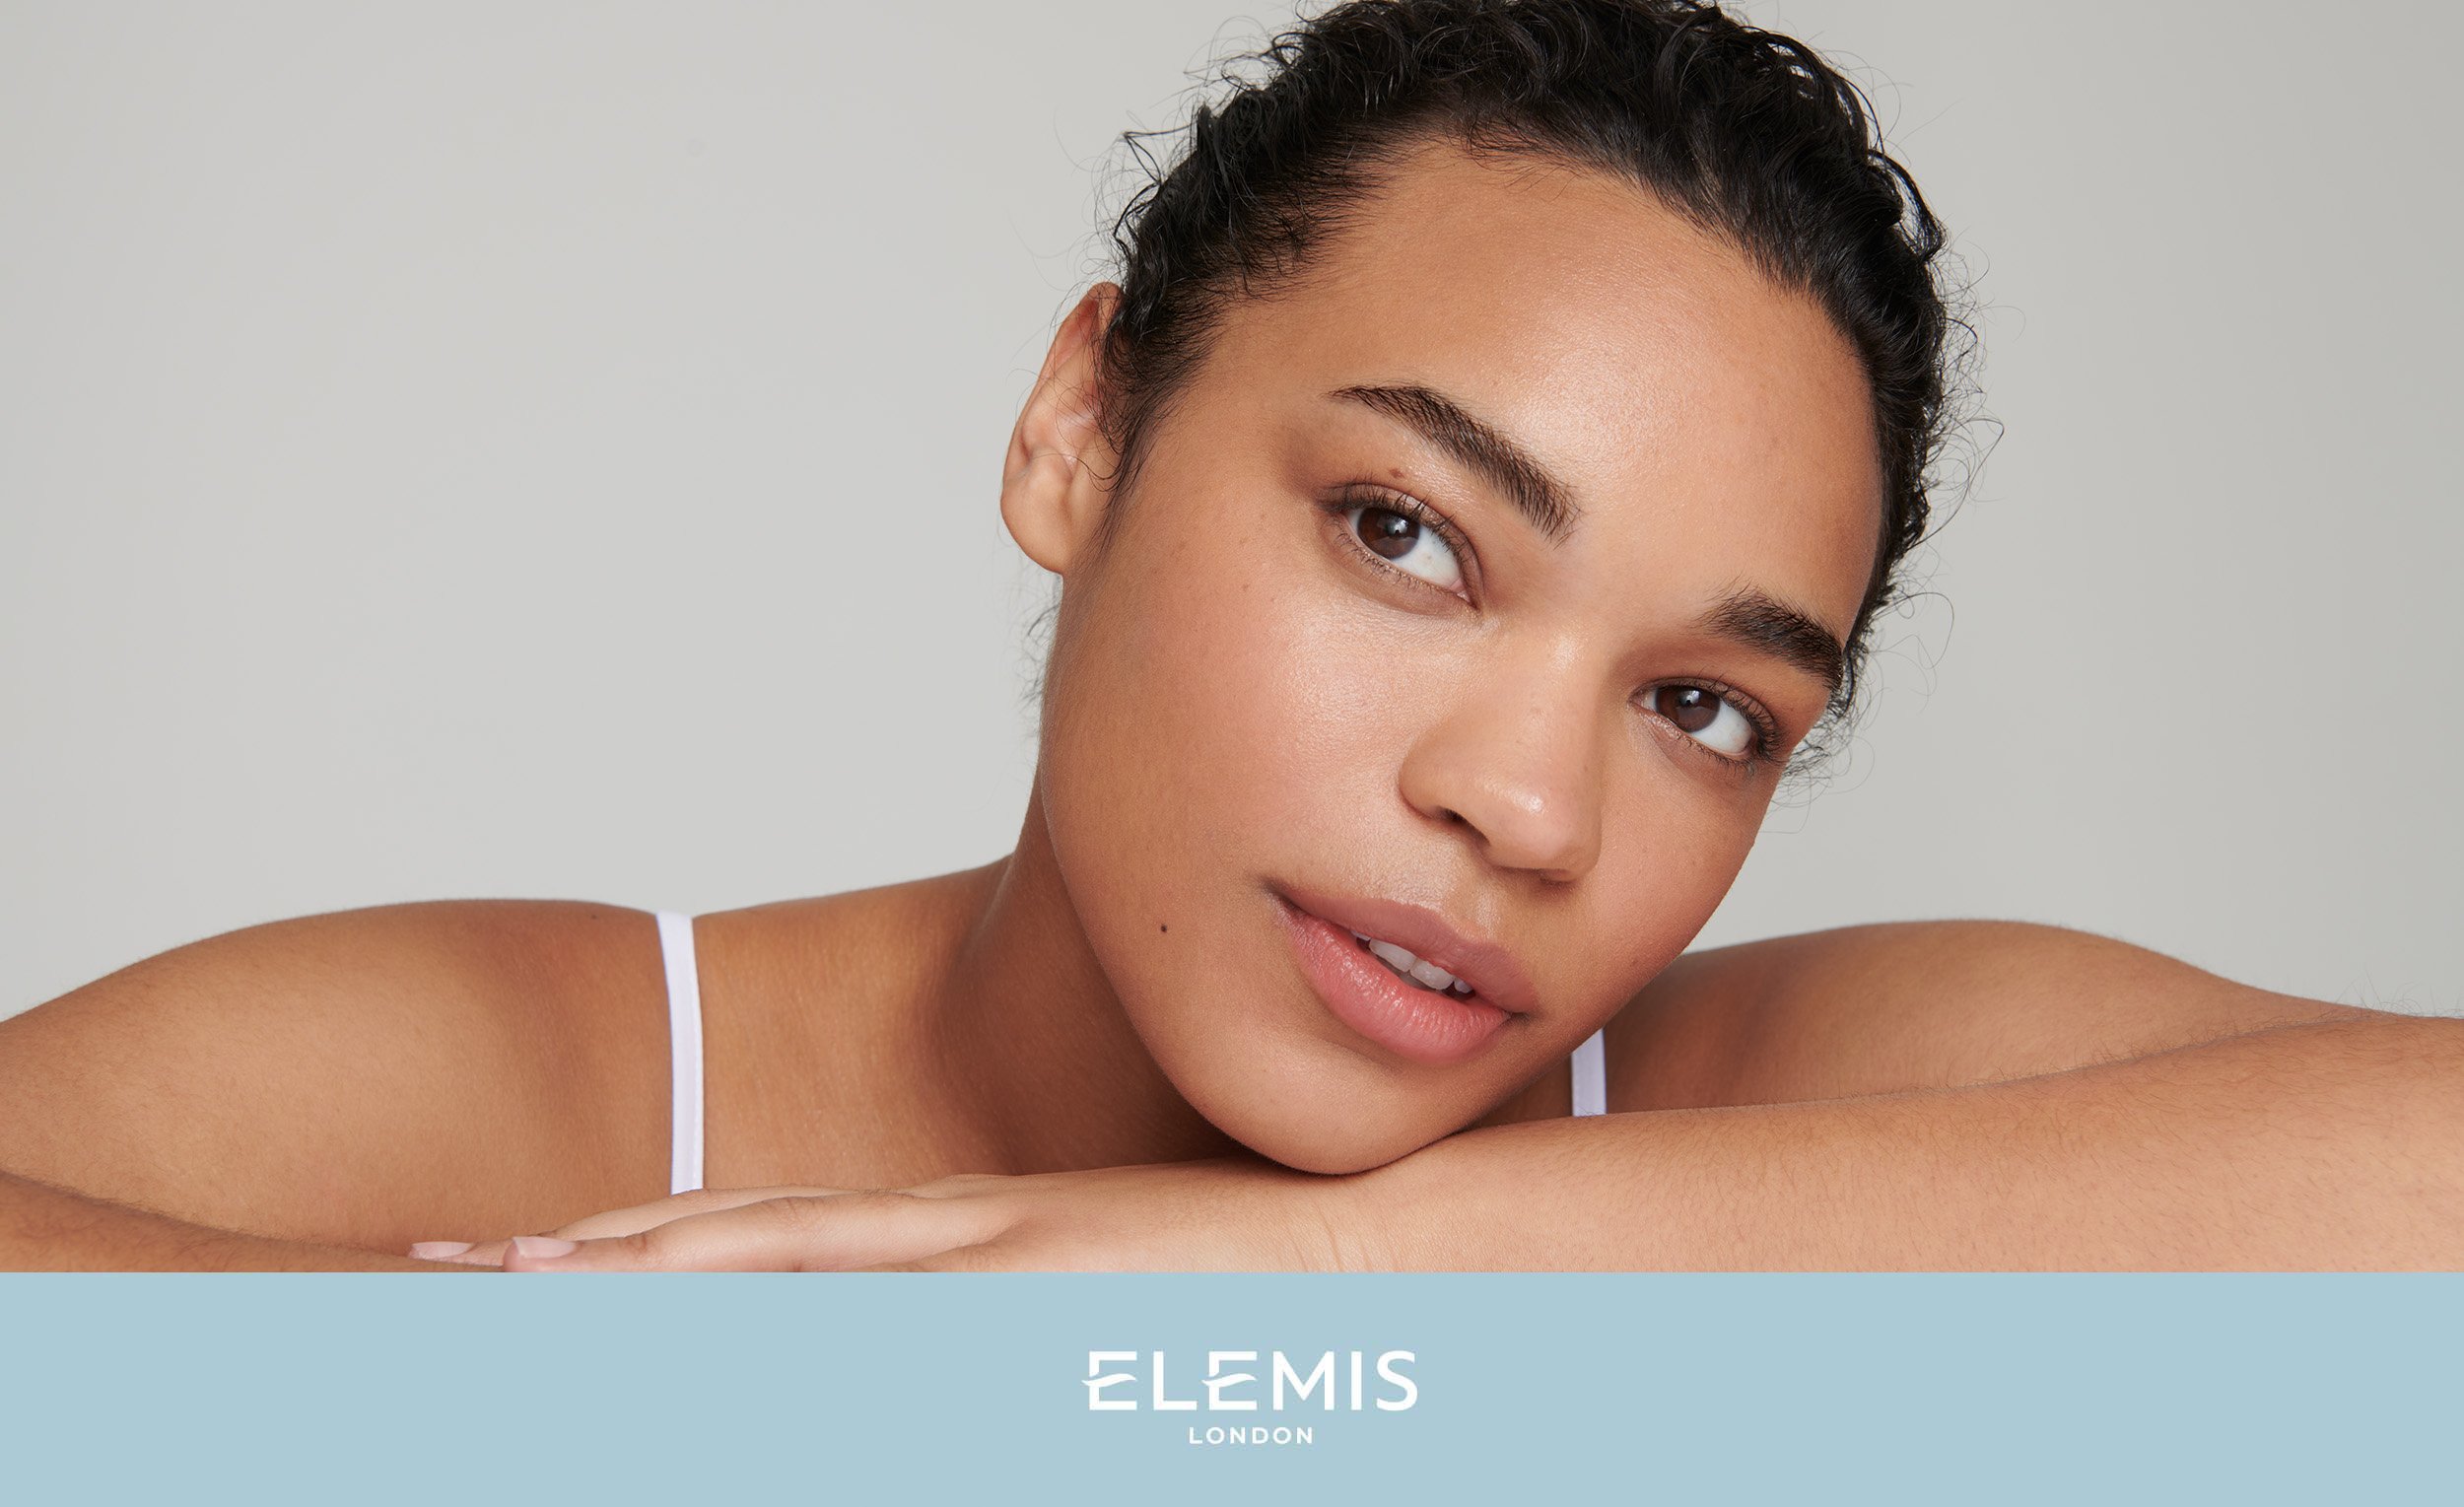 Elemis Skin Services Campaign